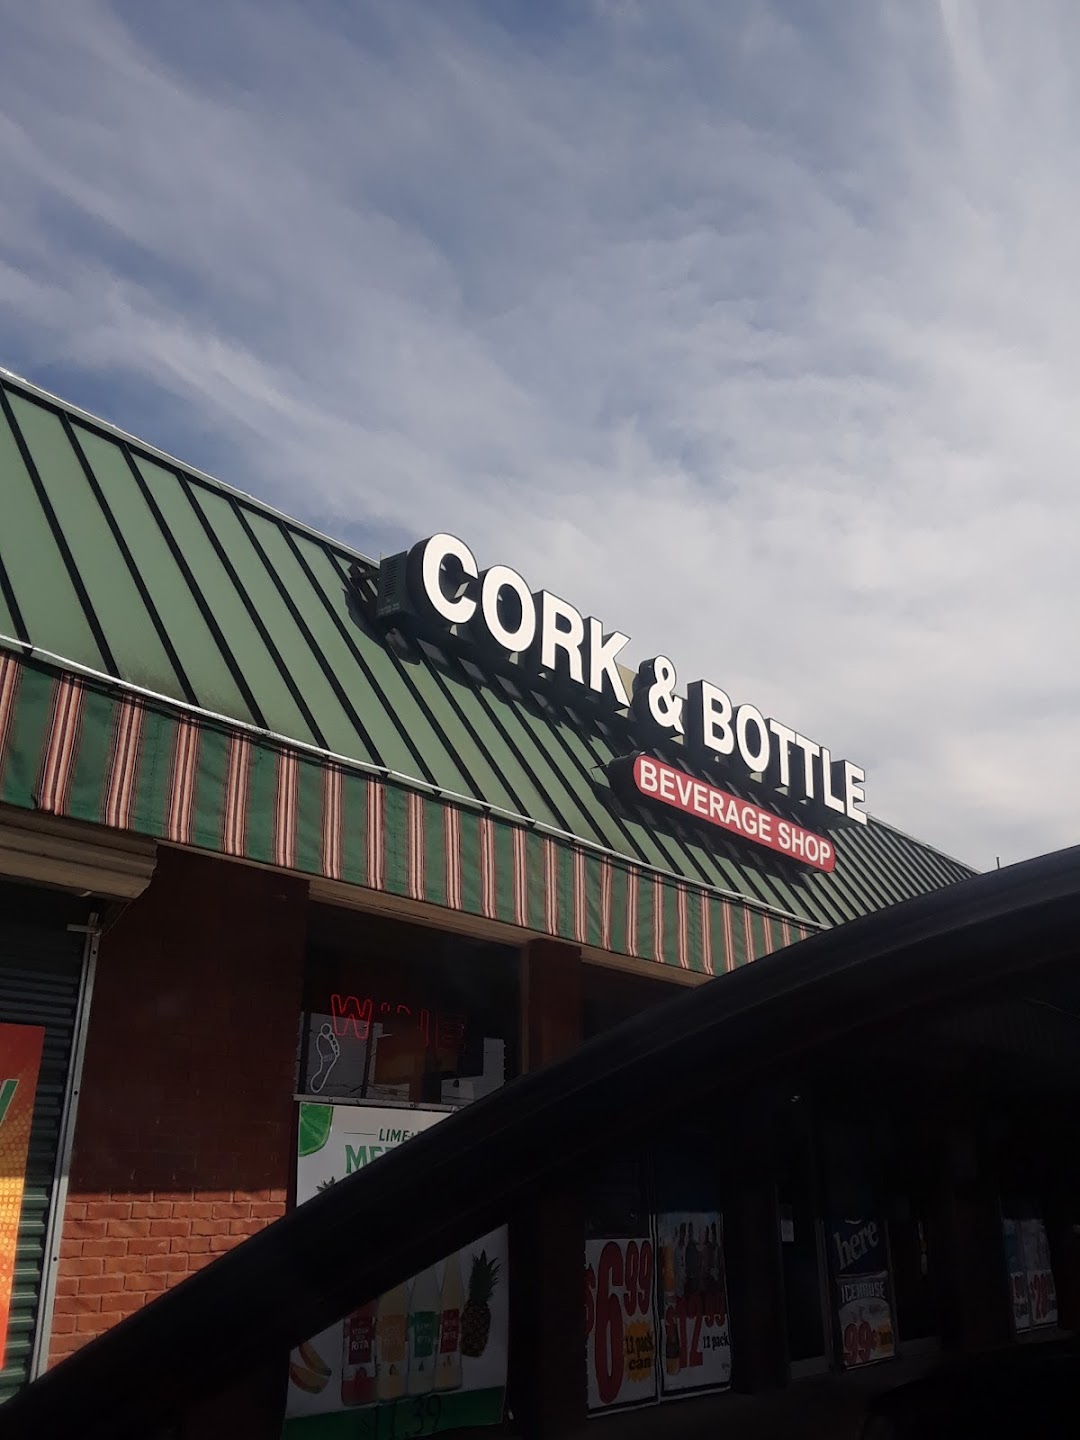 Cork & Bottle